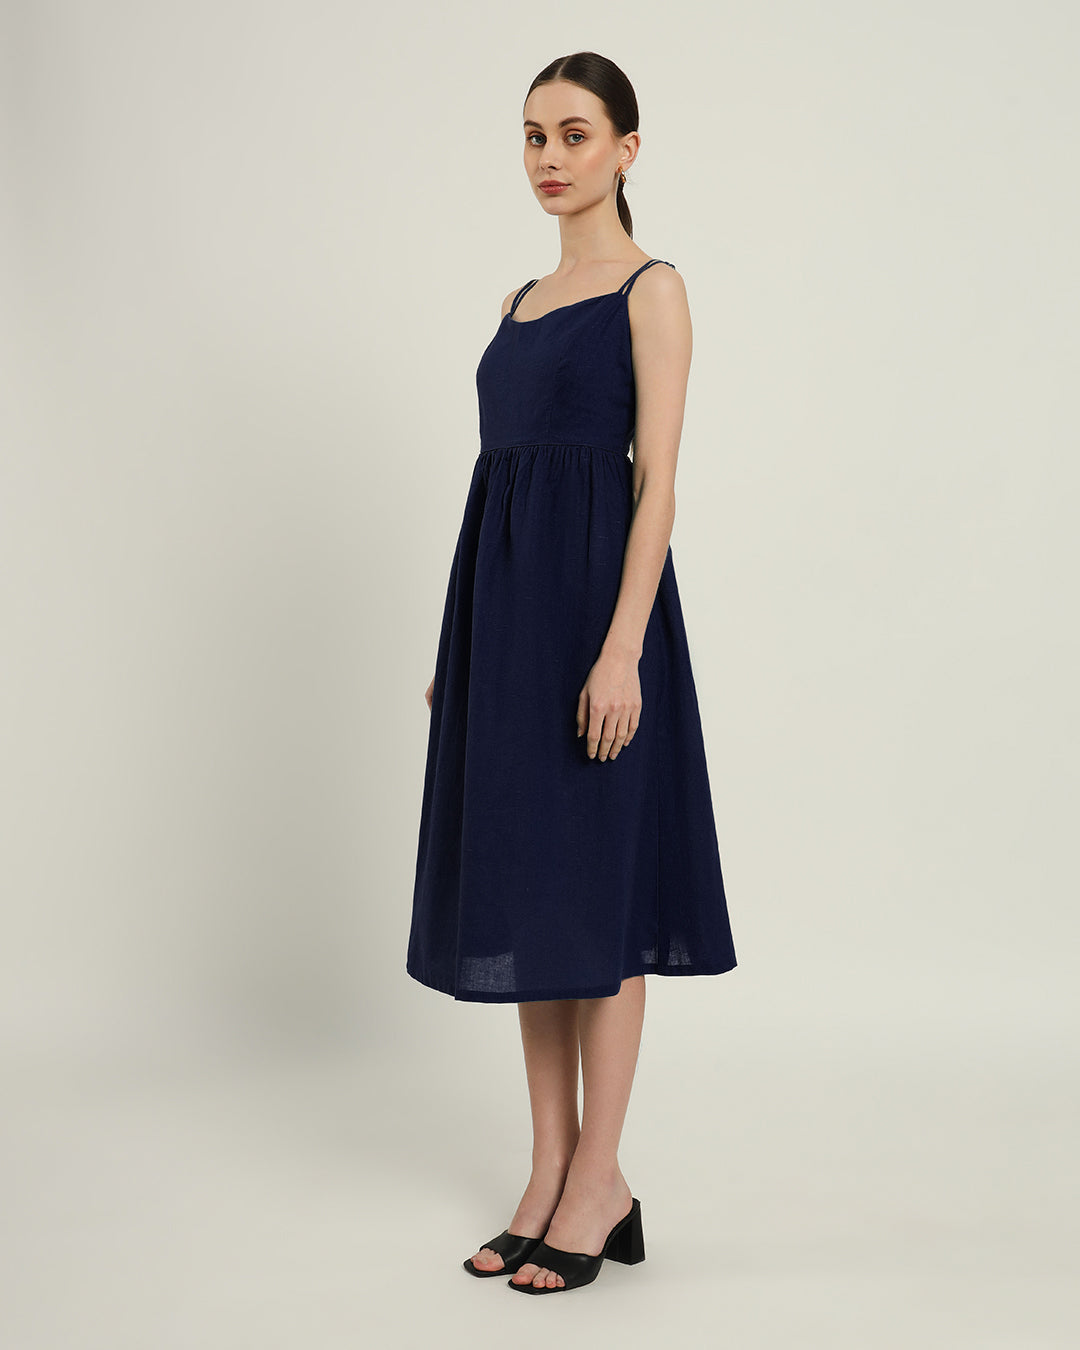 The Haiti Daisy Midnight Blue Linen Dress